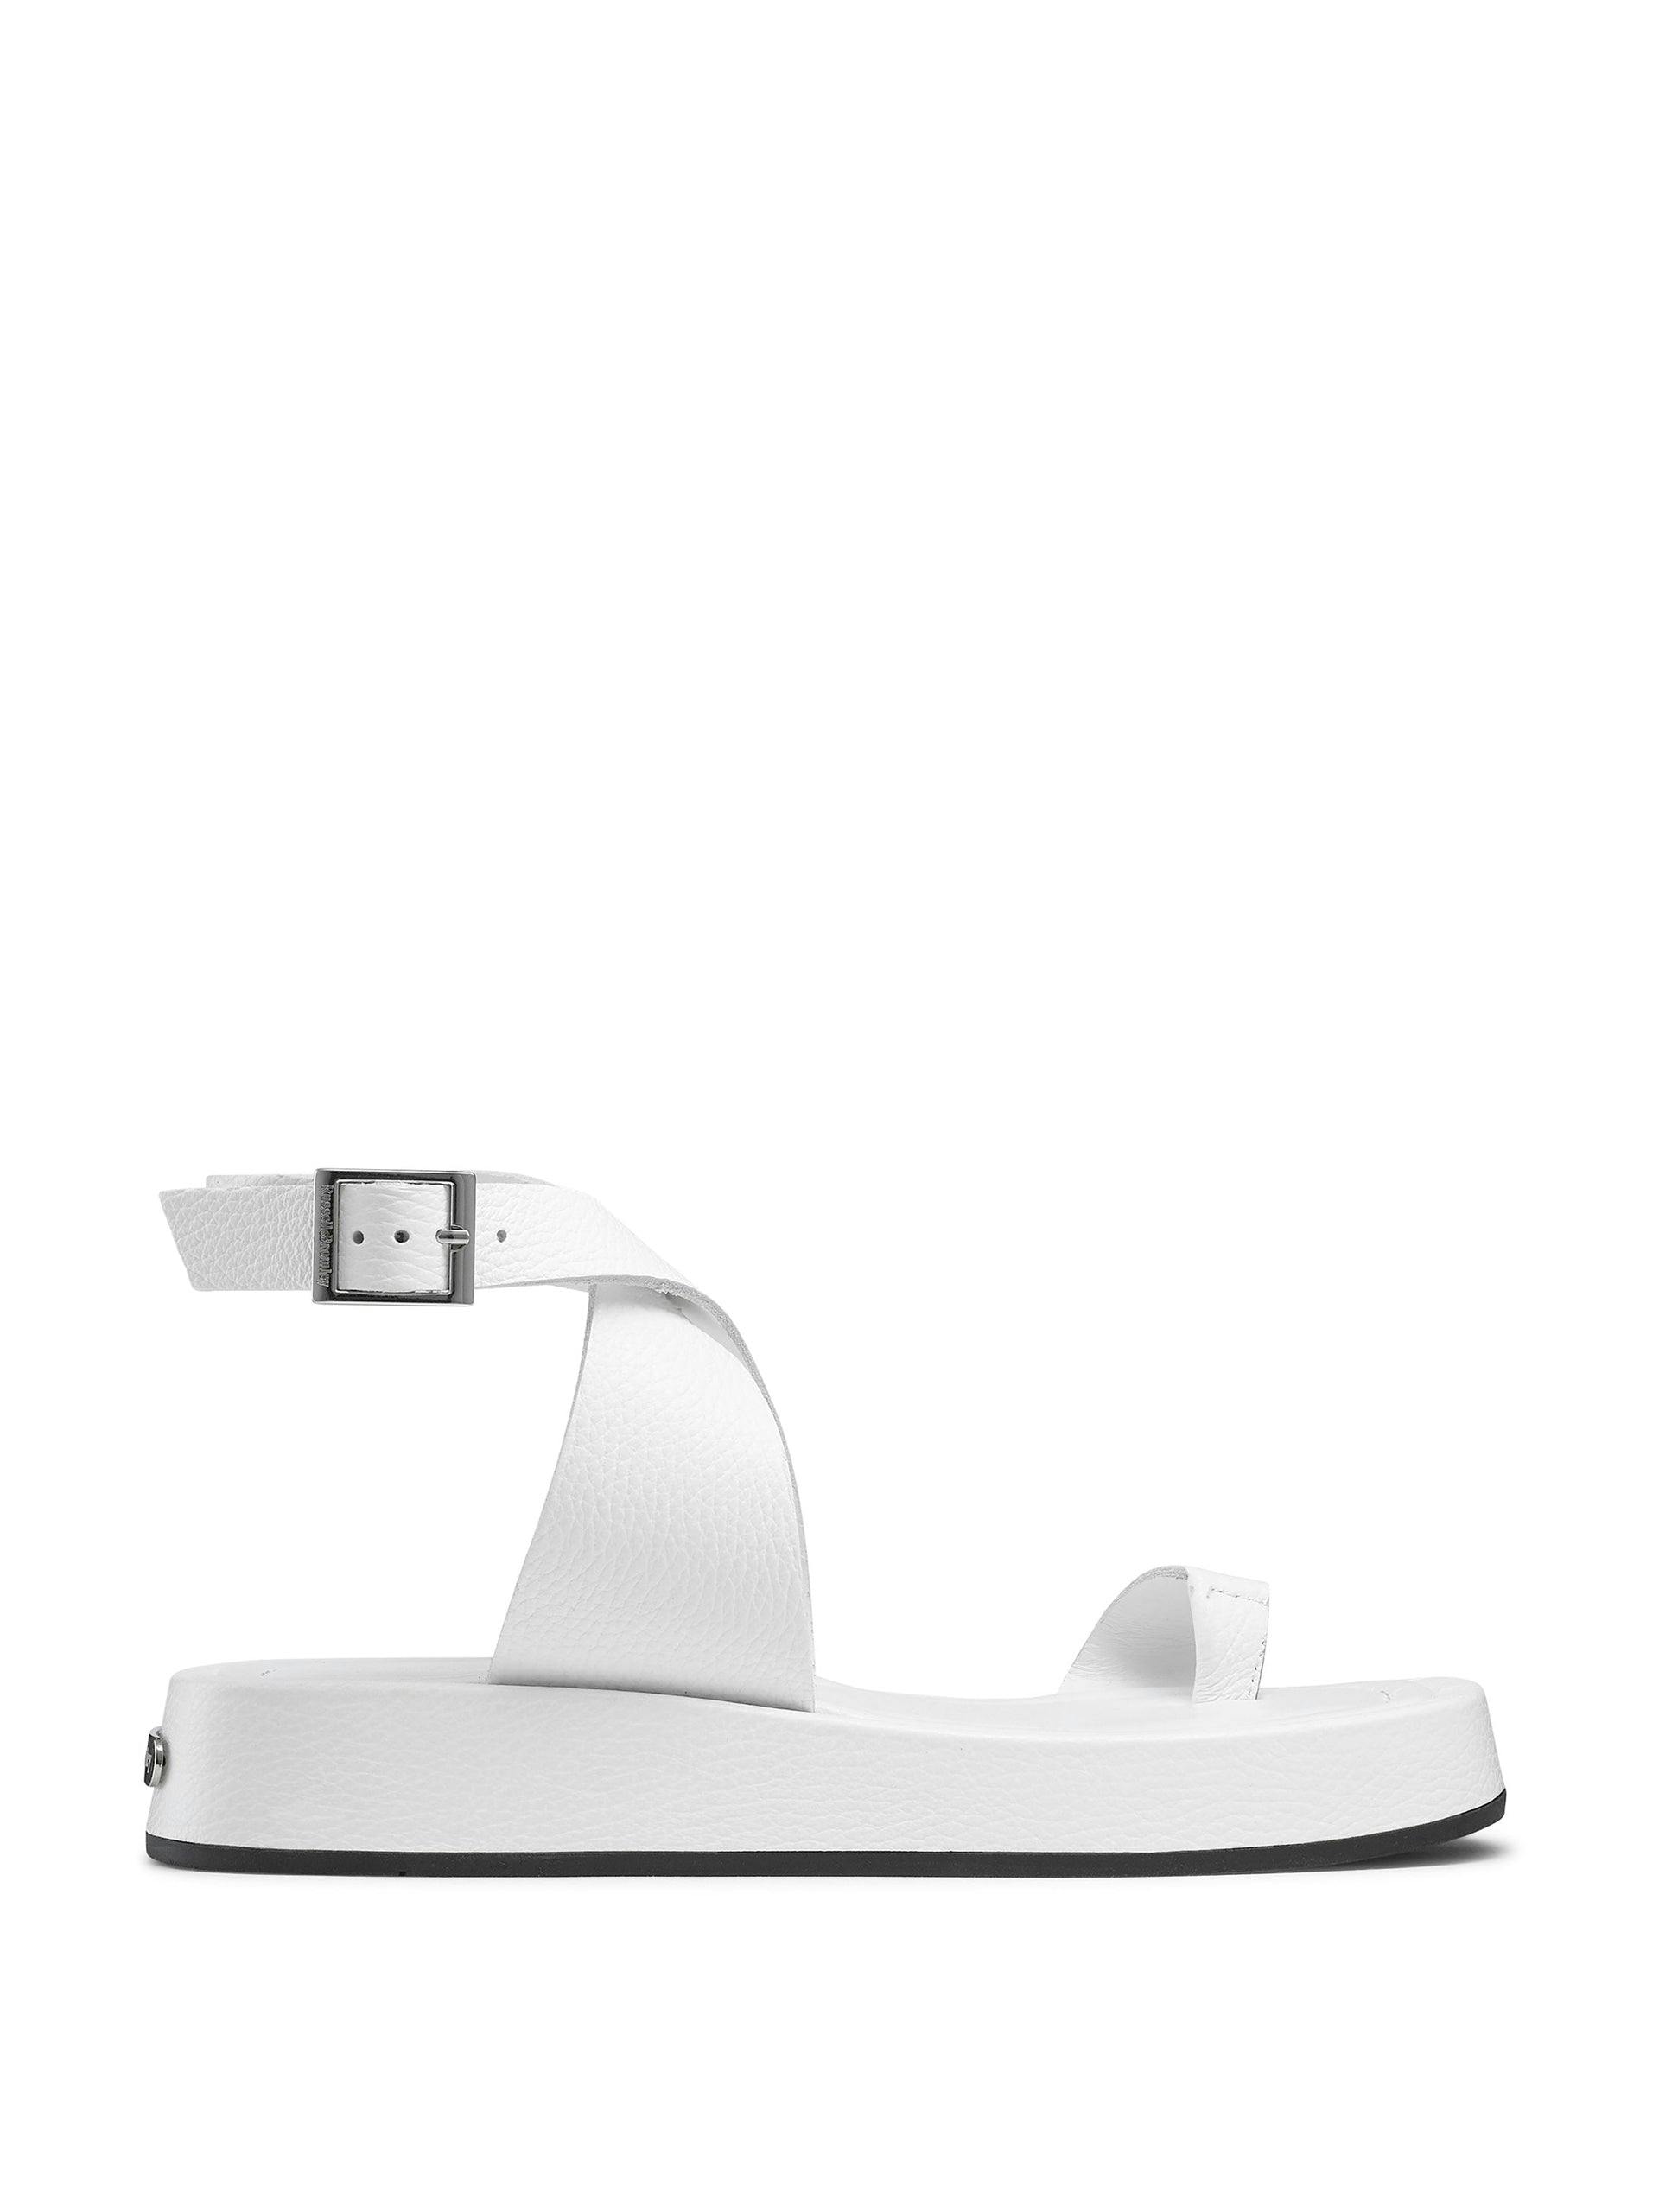 White Toetally flatform sandal